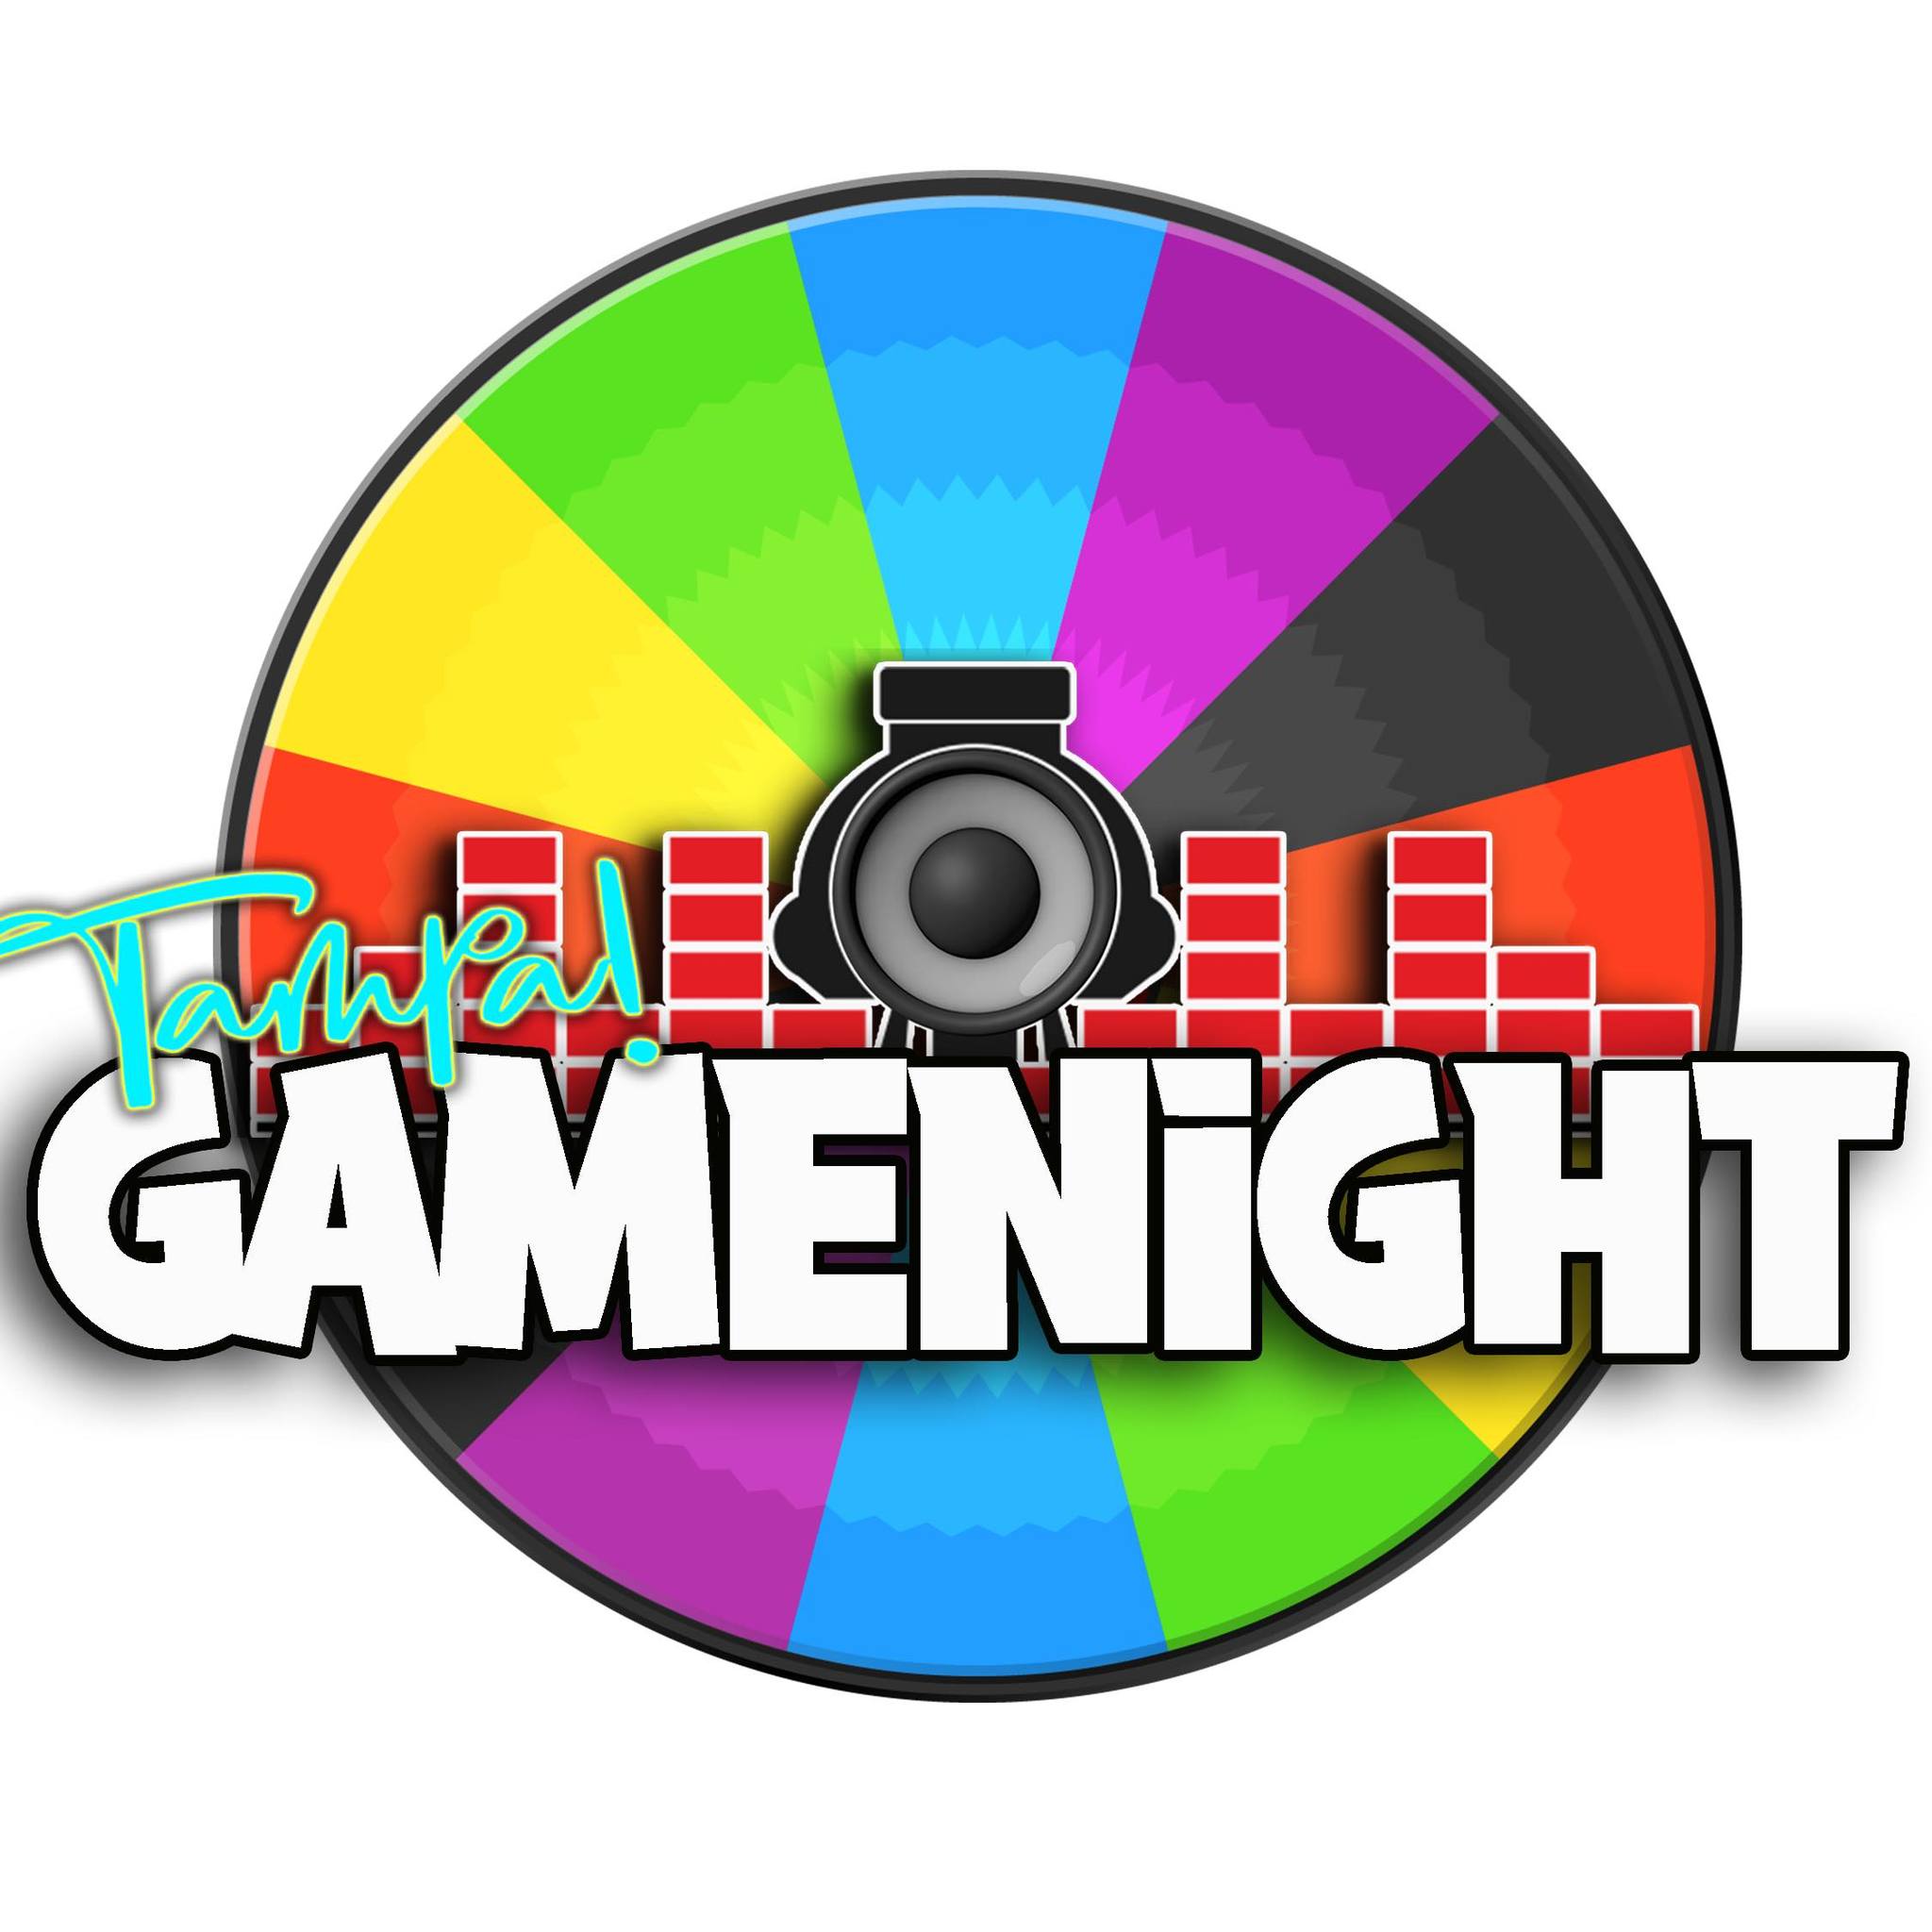 tampa gamenight logo